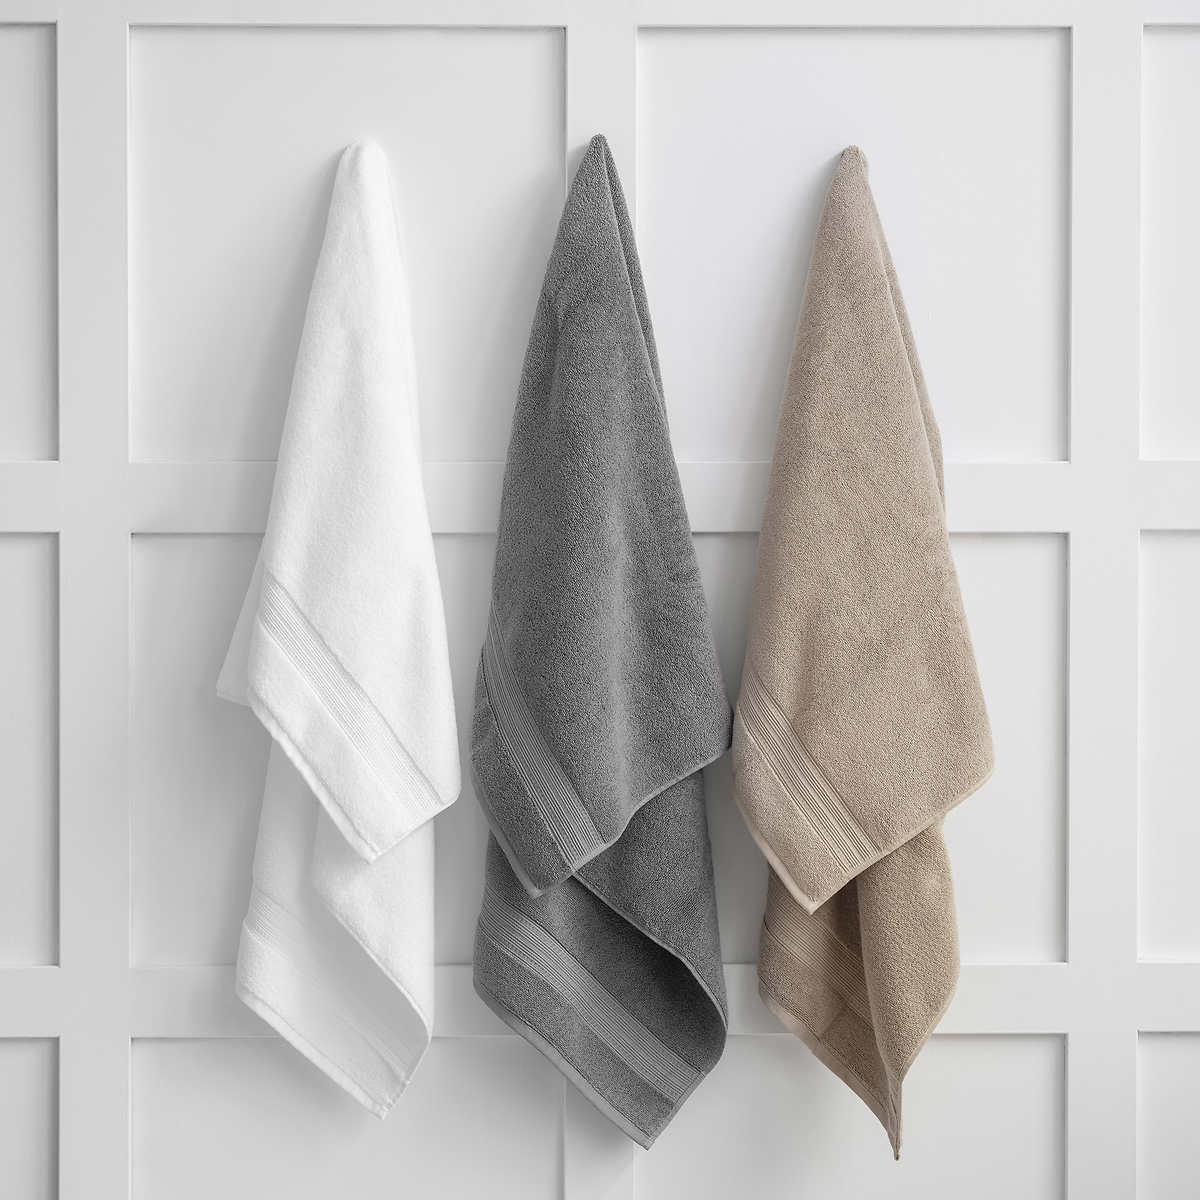 Purely Indulgent 100% Hygro Cotton Bath Towel 30 x 58 Gunmetal Gray